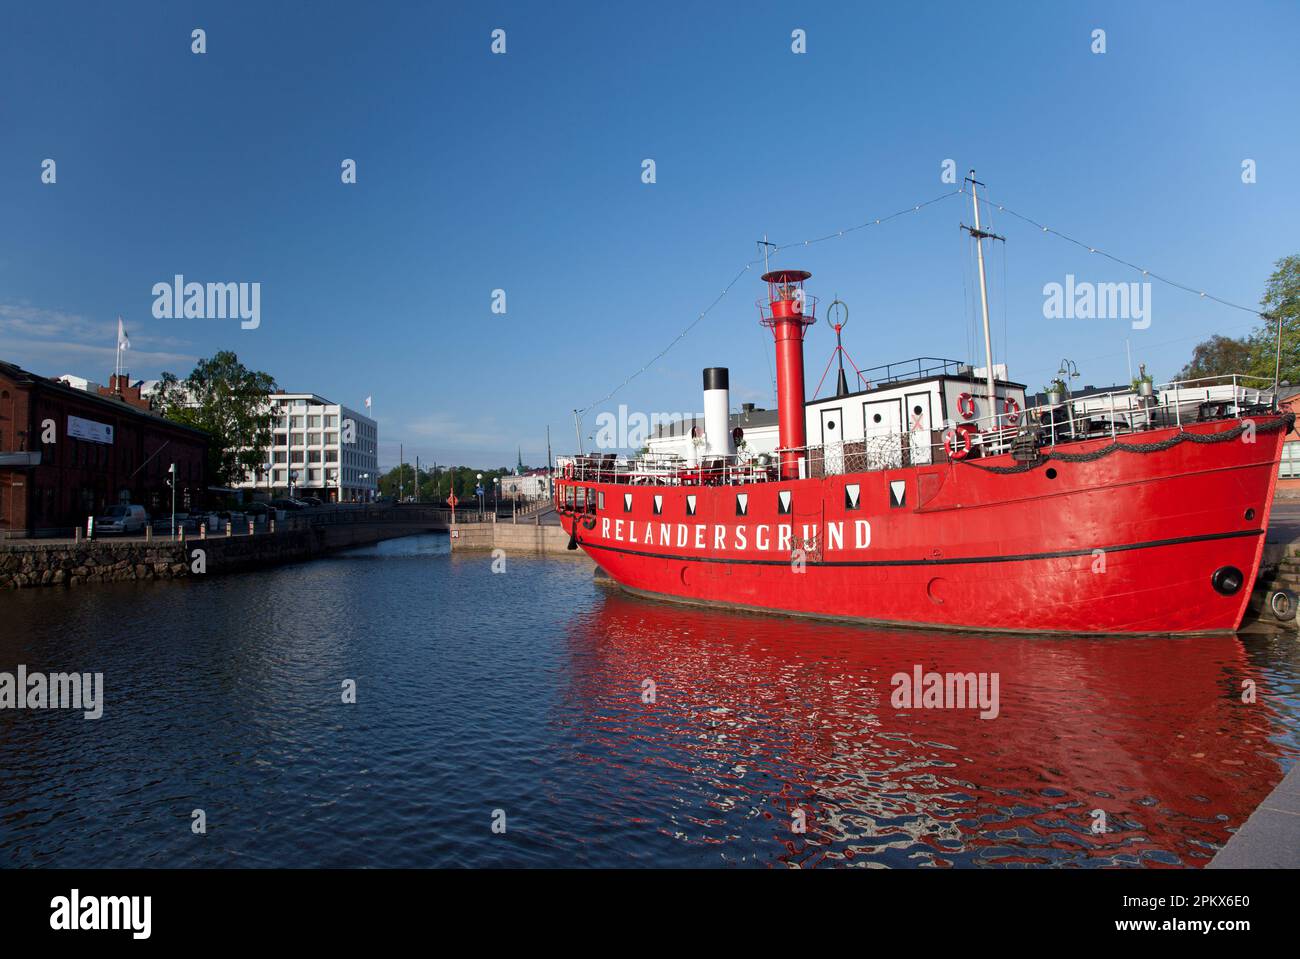 Finland, Helsinki,  Relandersgrund boat used as a floating restaurant. Stock Photo